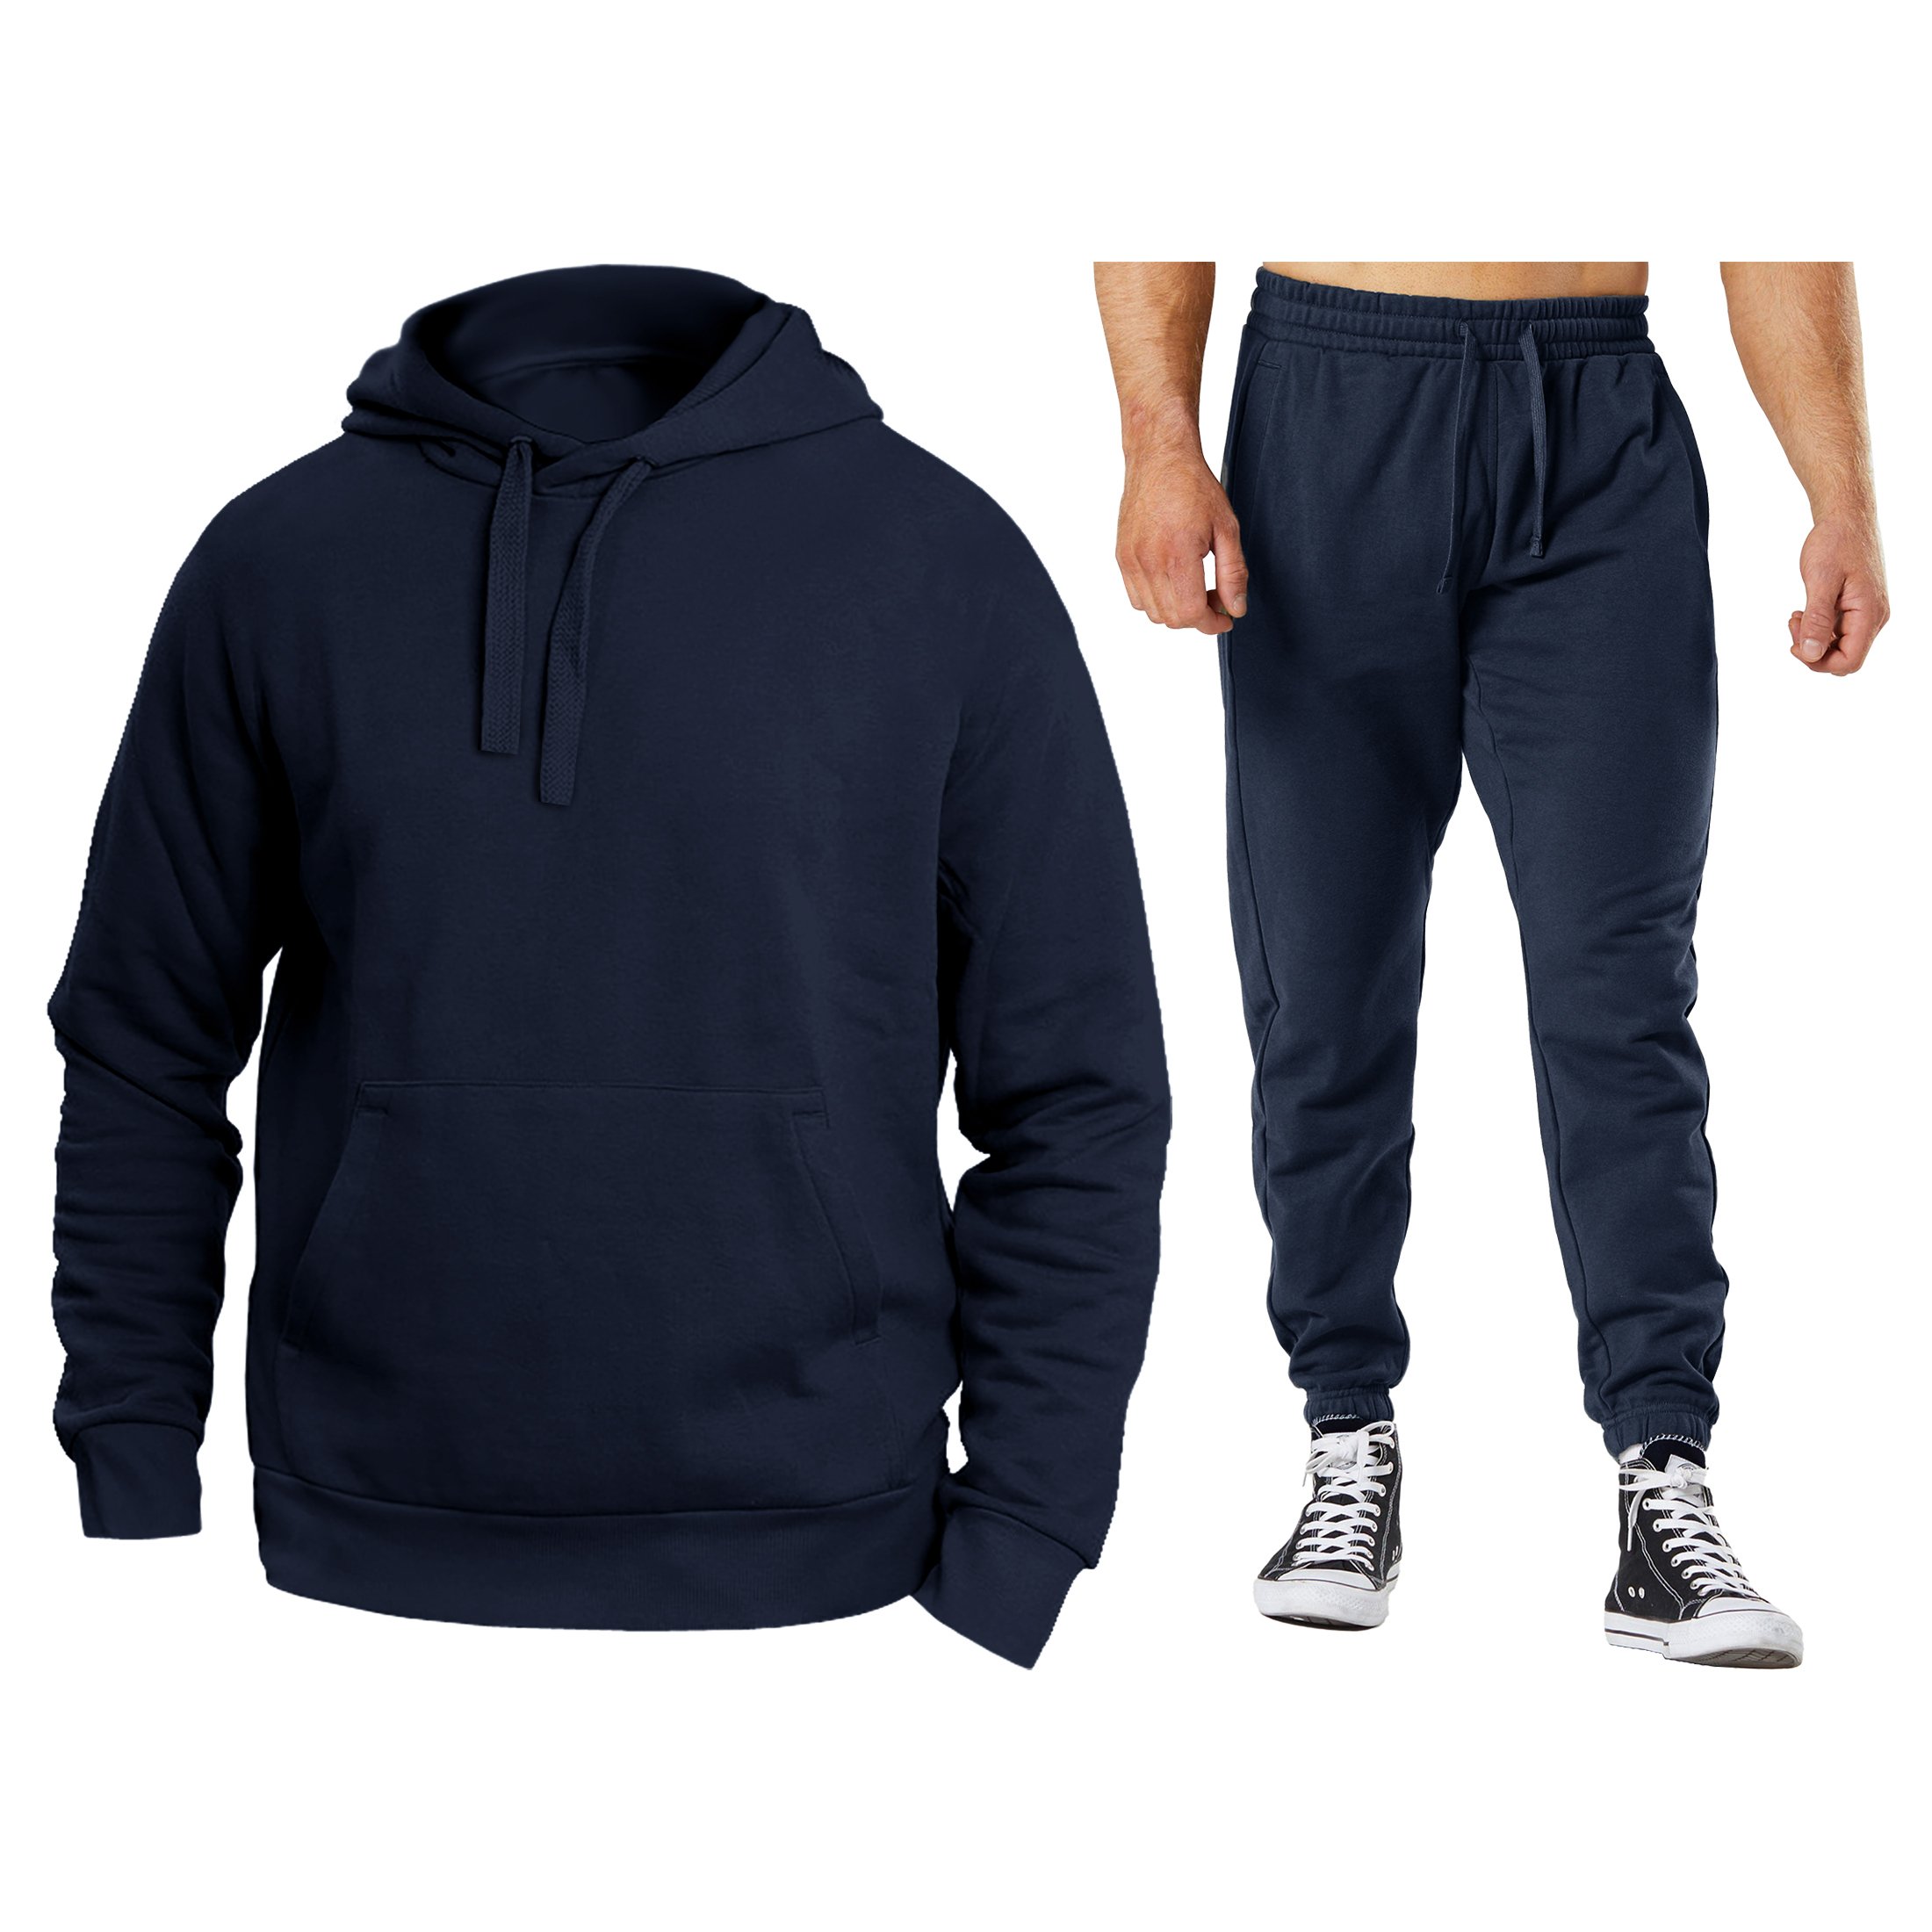 Men's Athletic Warm Jogging Pullover Active Sweatsuit - Navy, X-Large